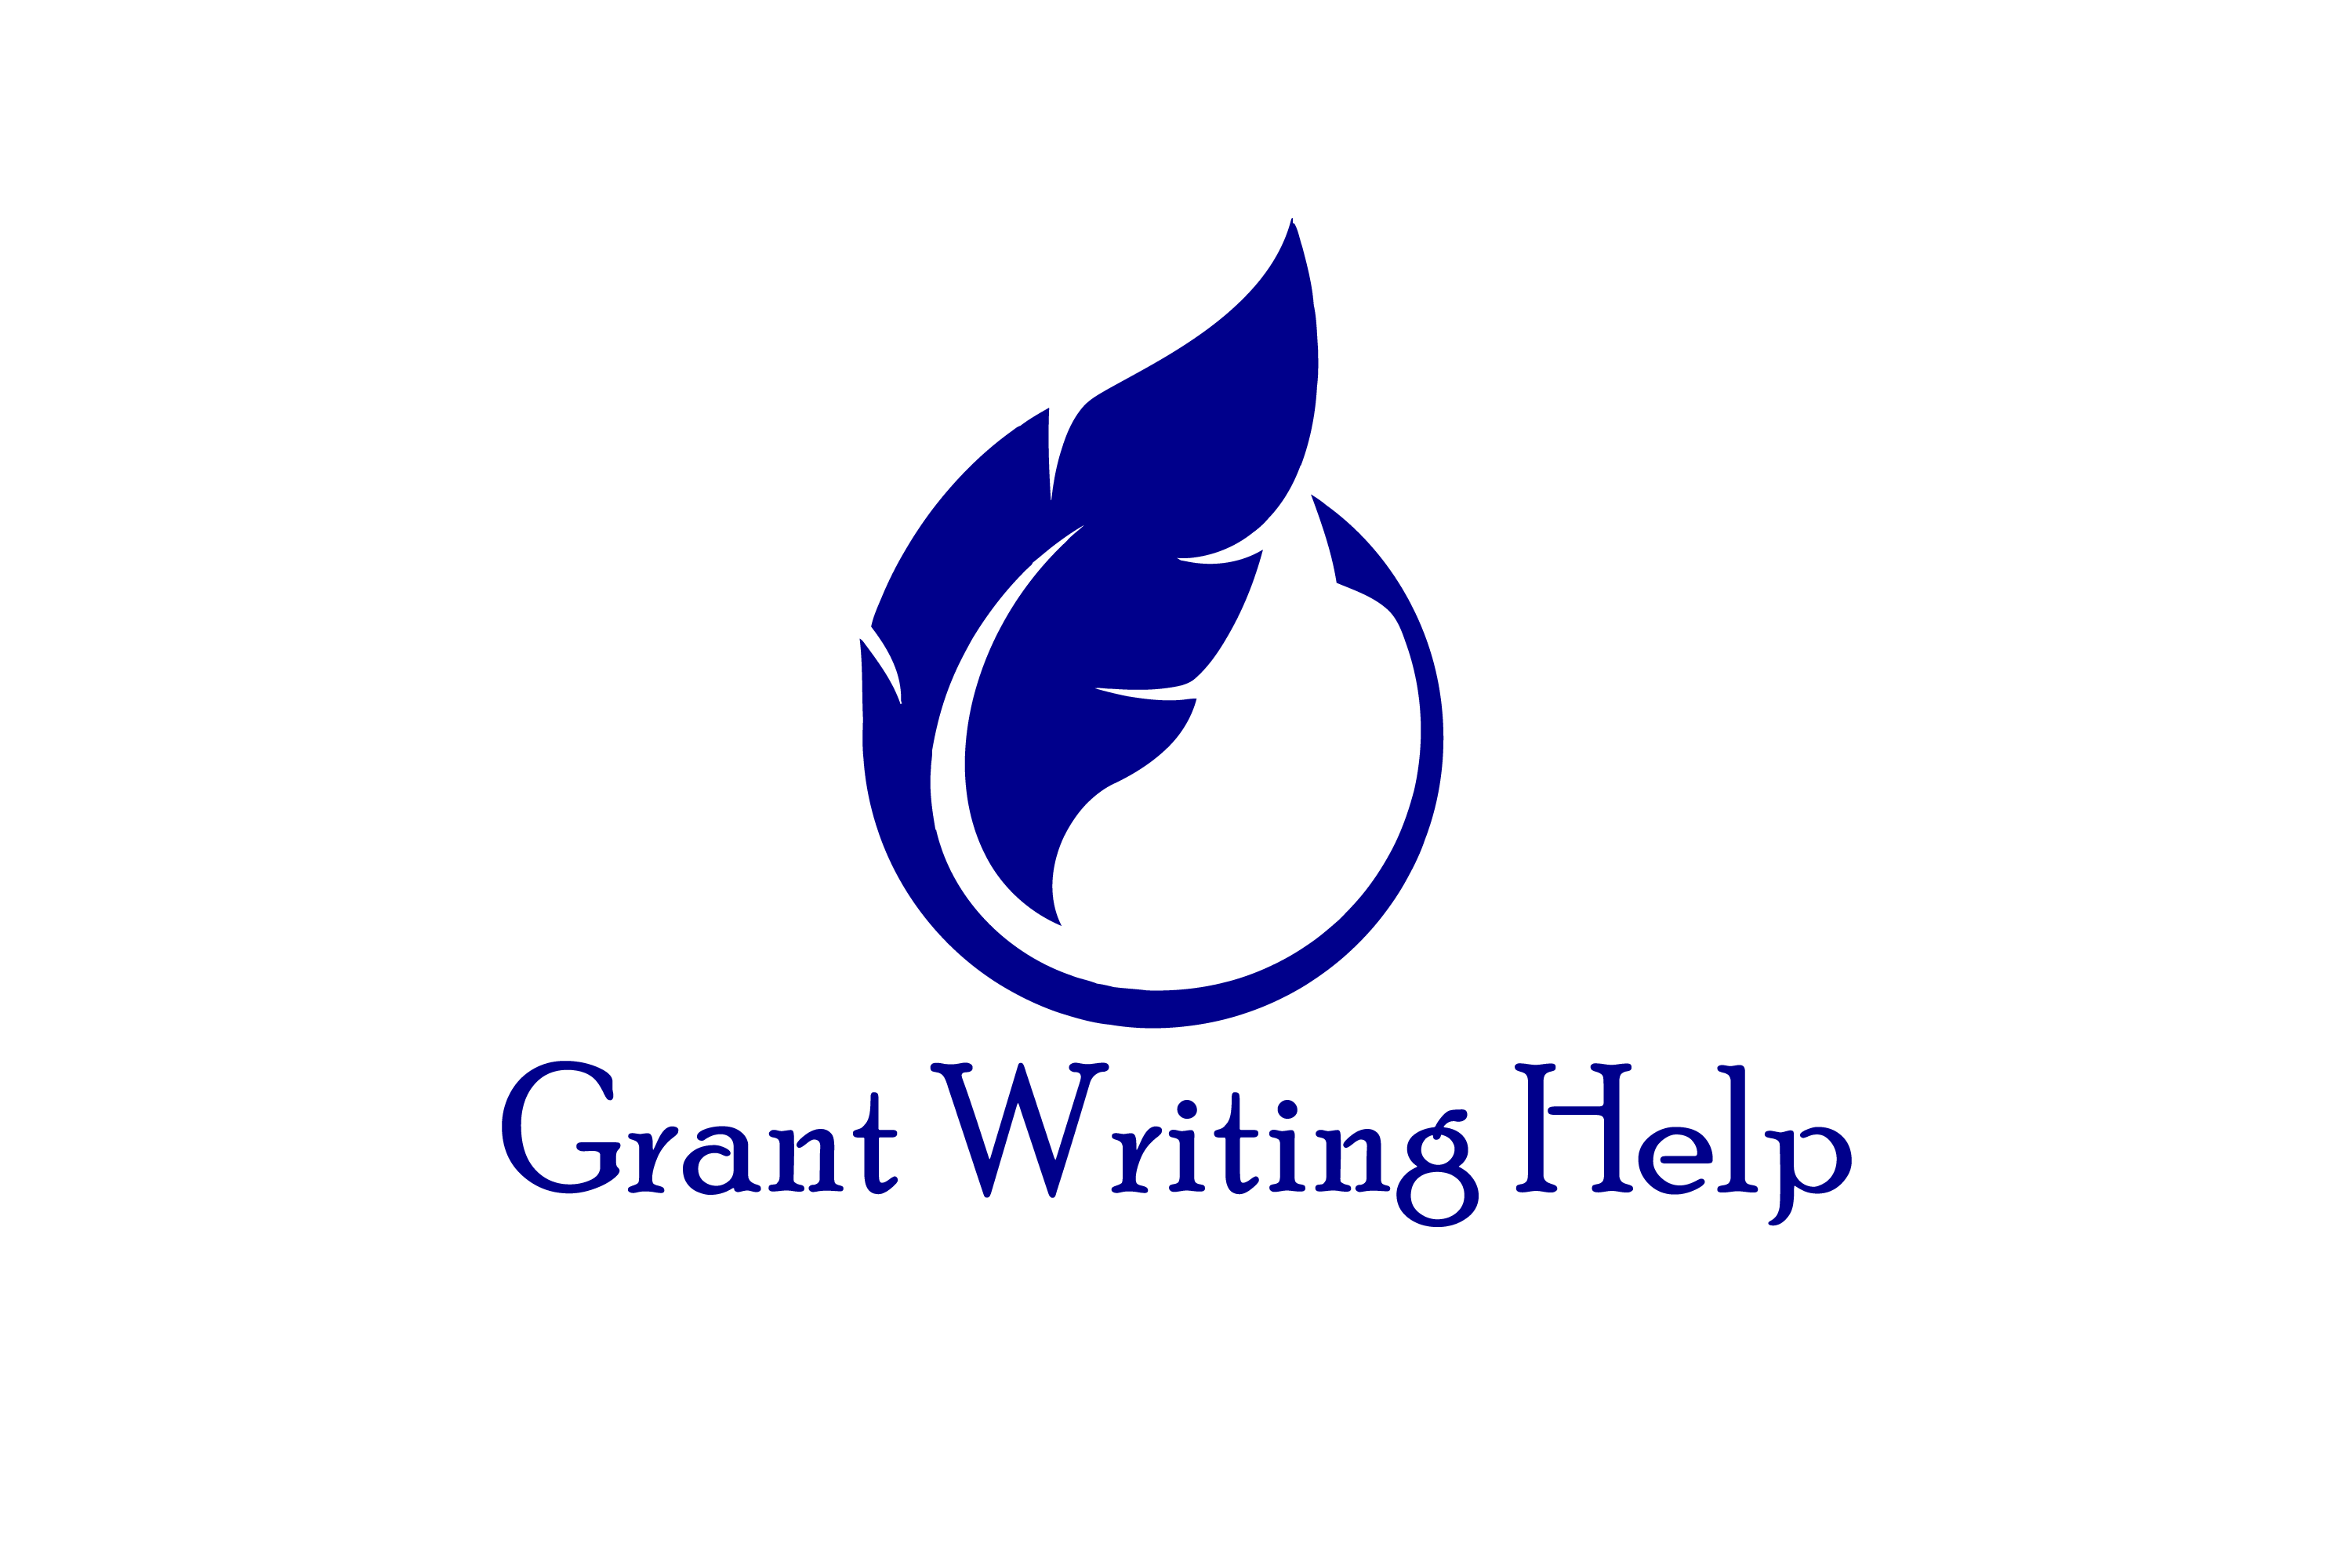 Grant Writing Help